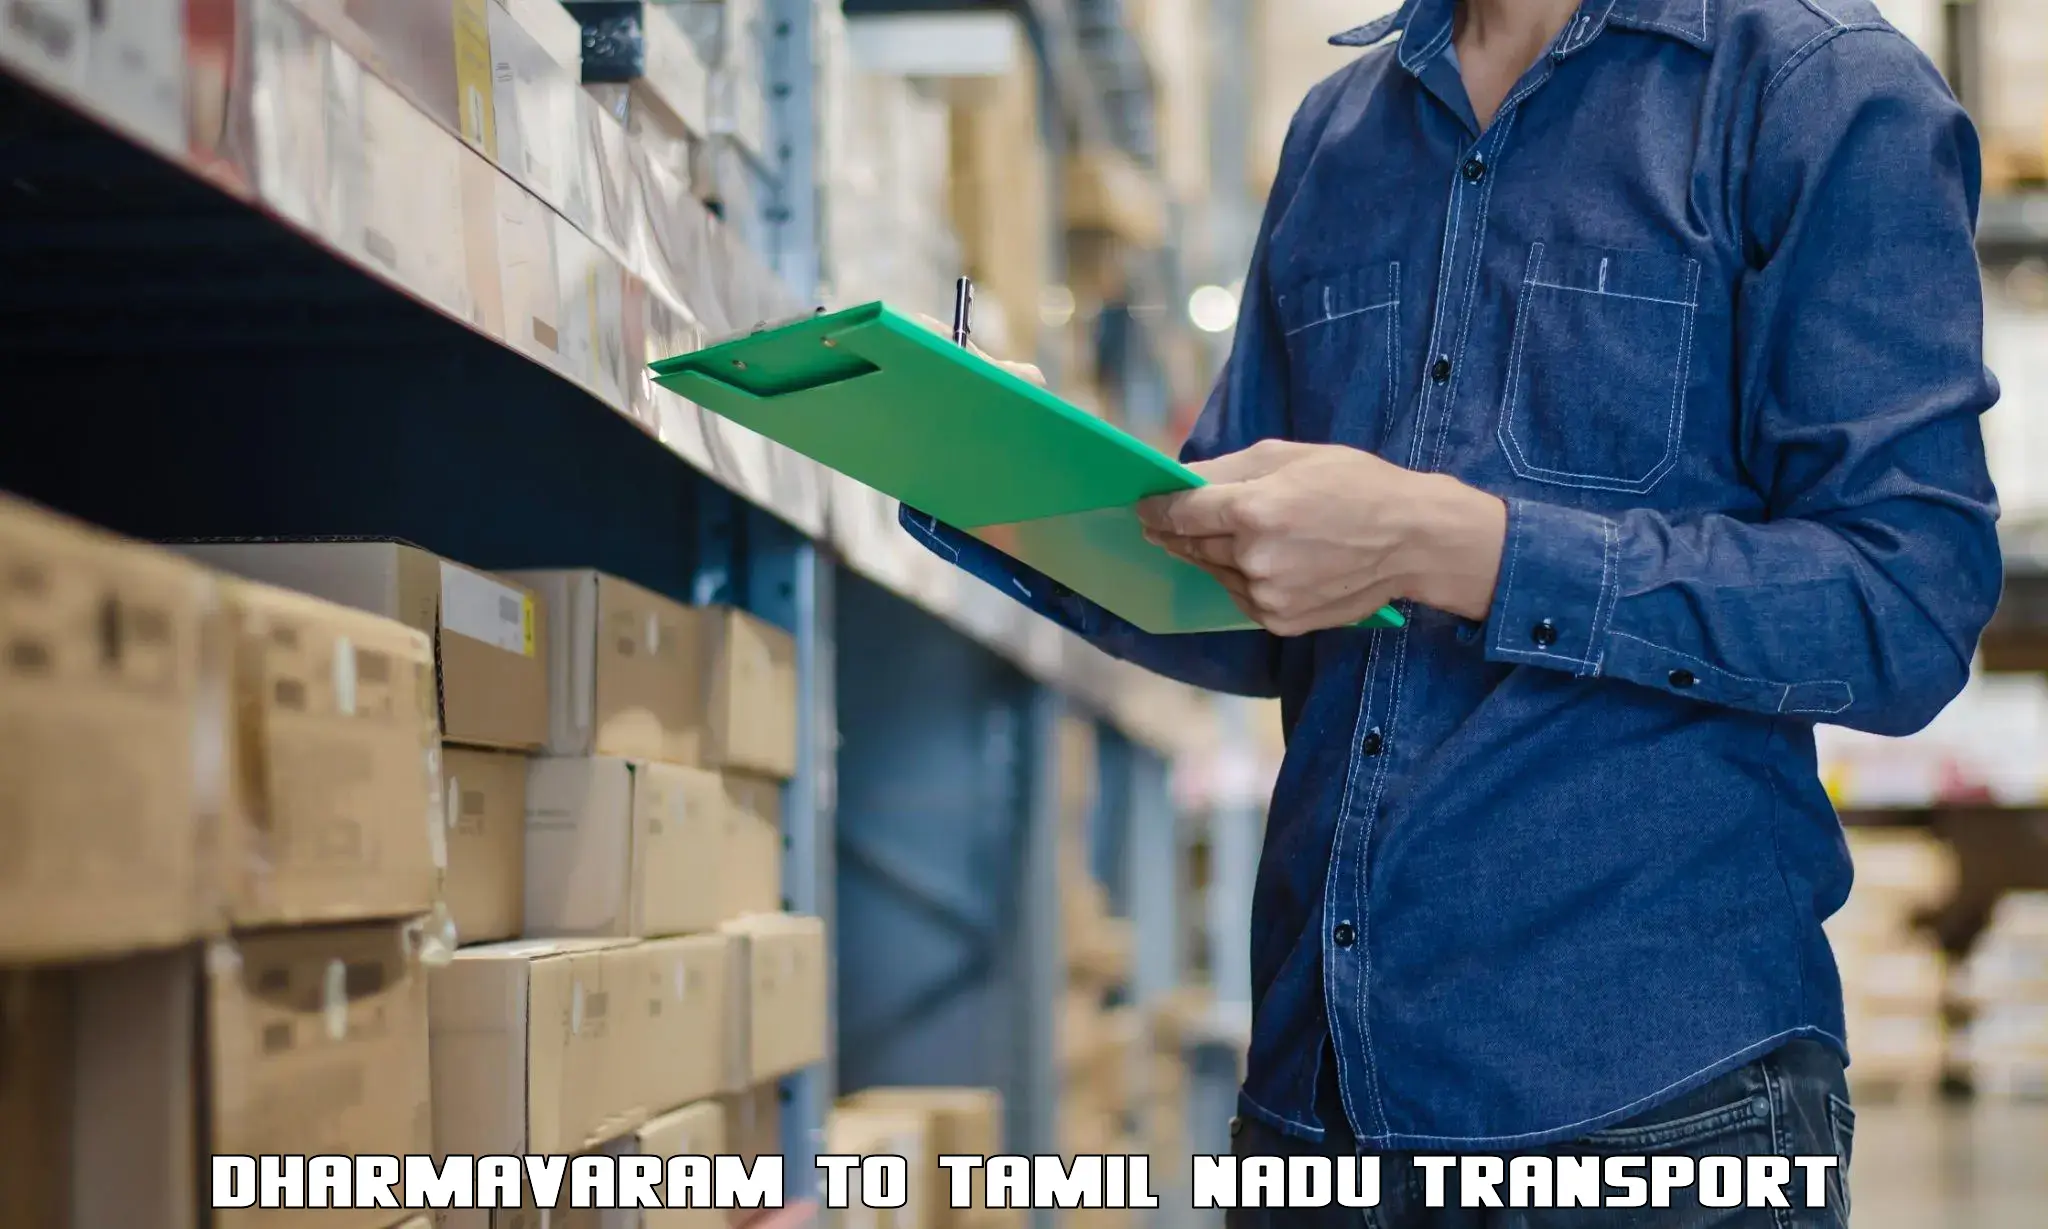 Delivery service Dharmavaram to Tamil Nadu